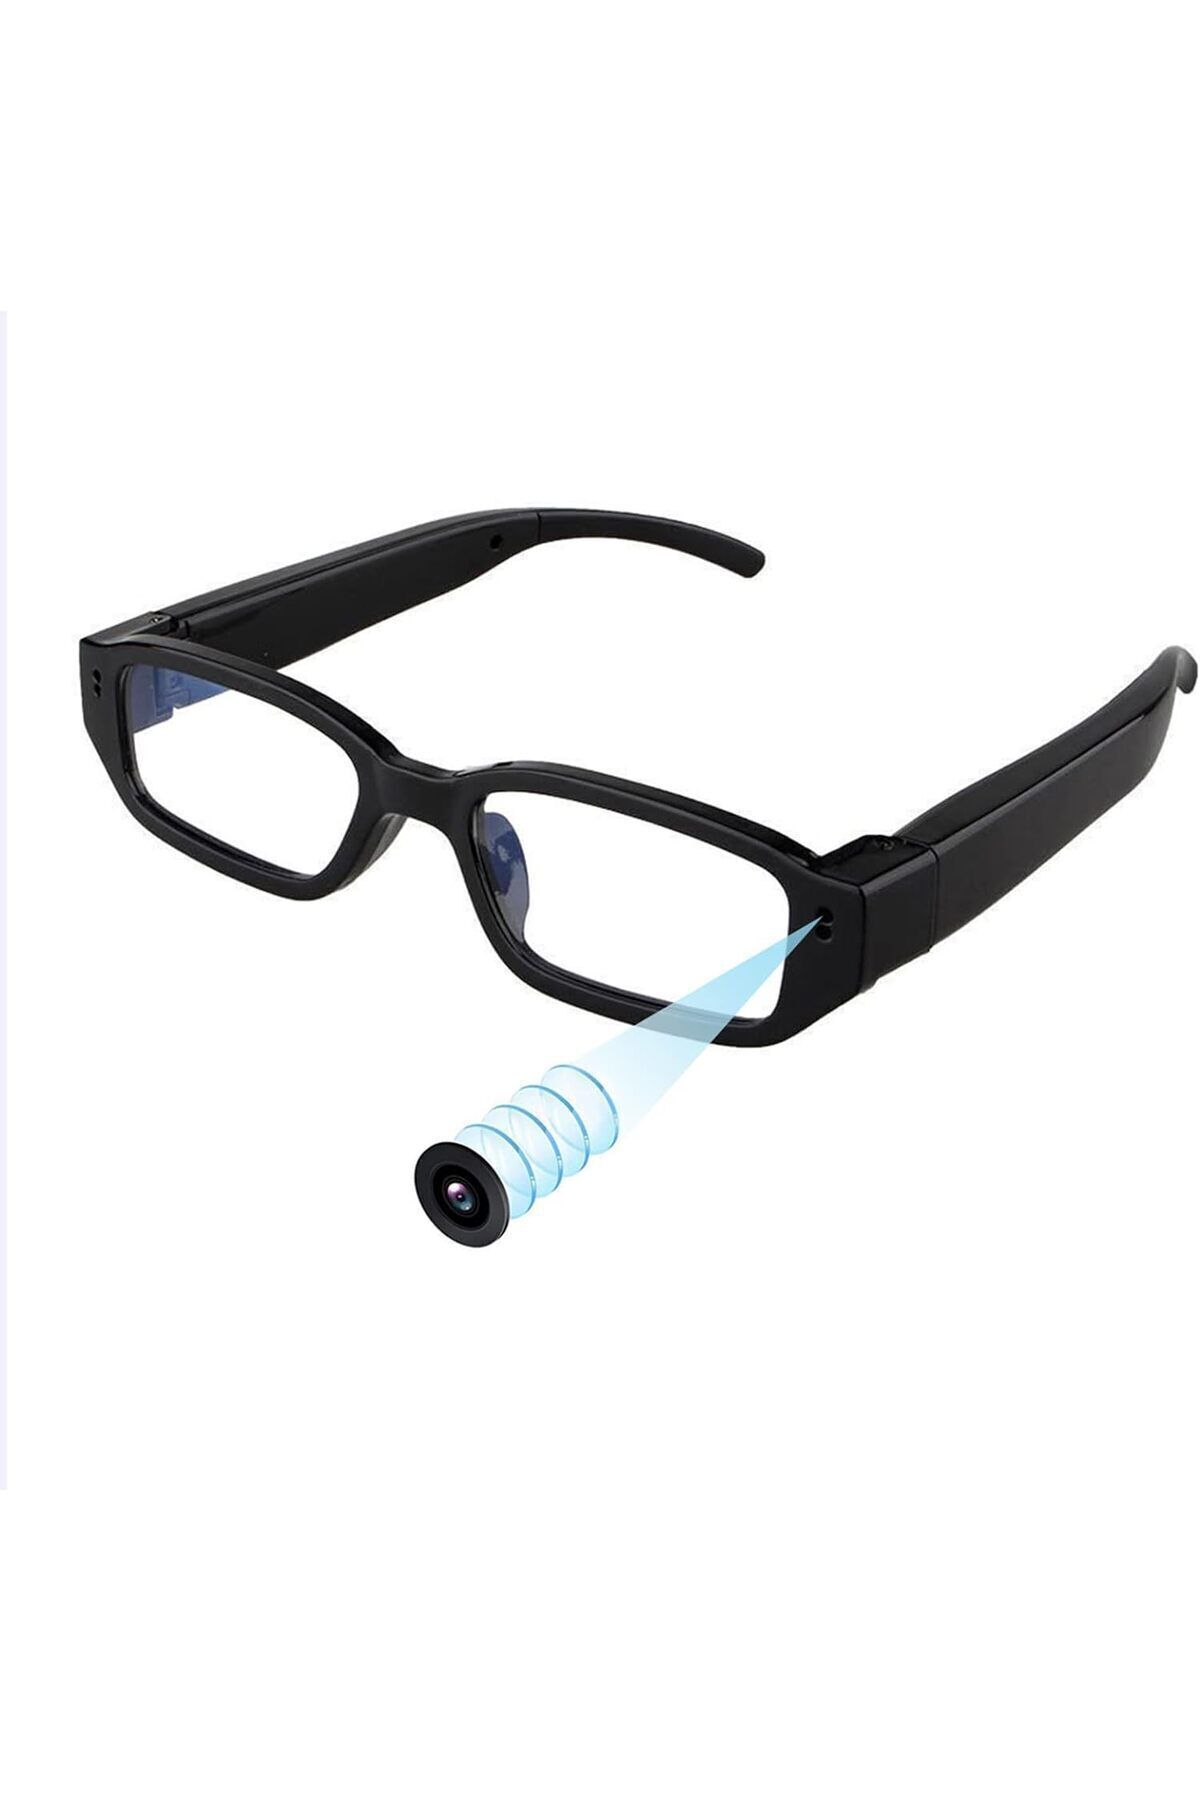 HAKÖZ Gözlük şık 1080p gözlük, 32 GB taşınabilir video cihazı